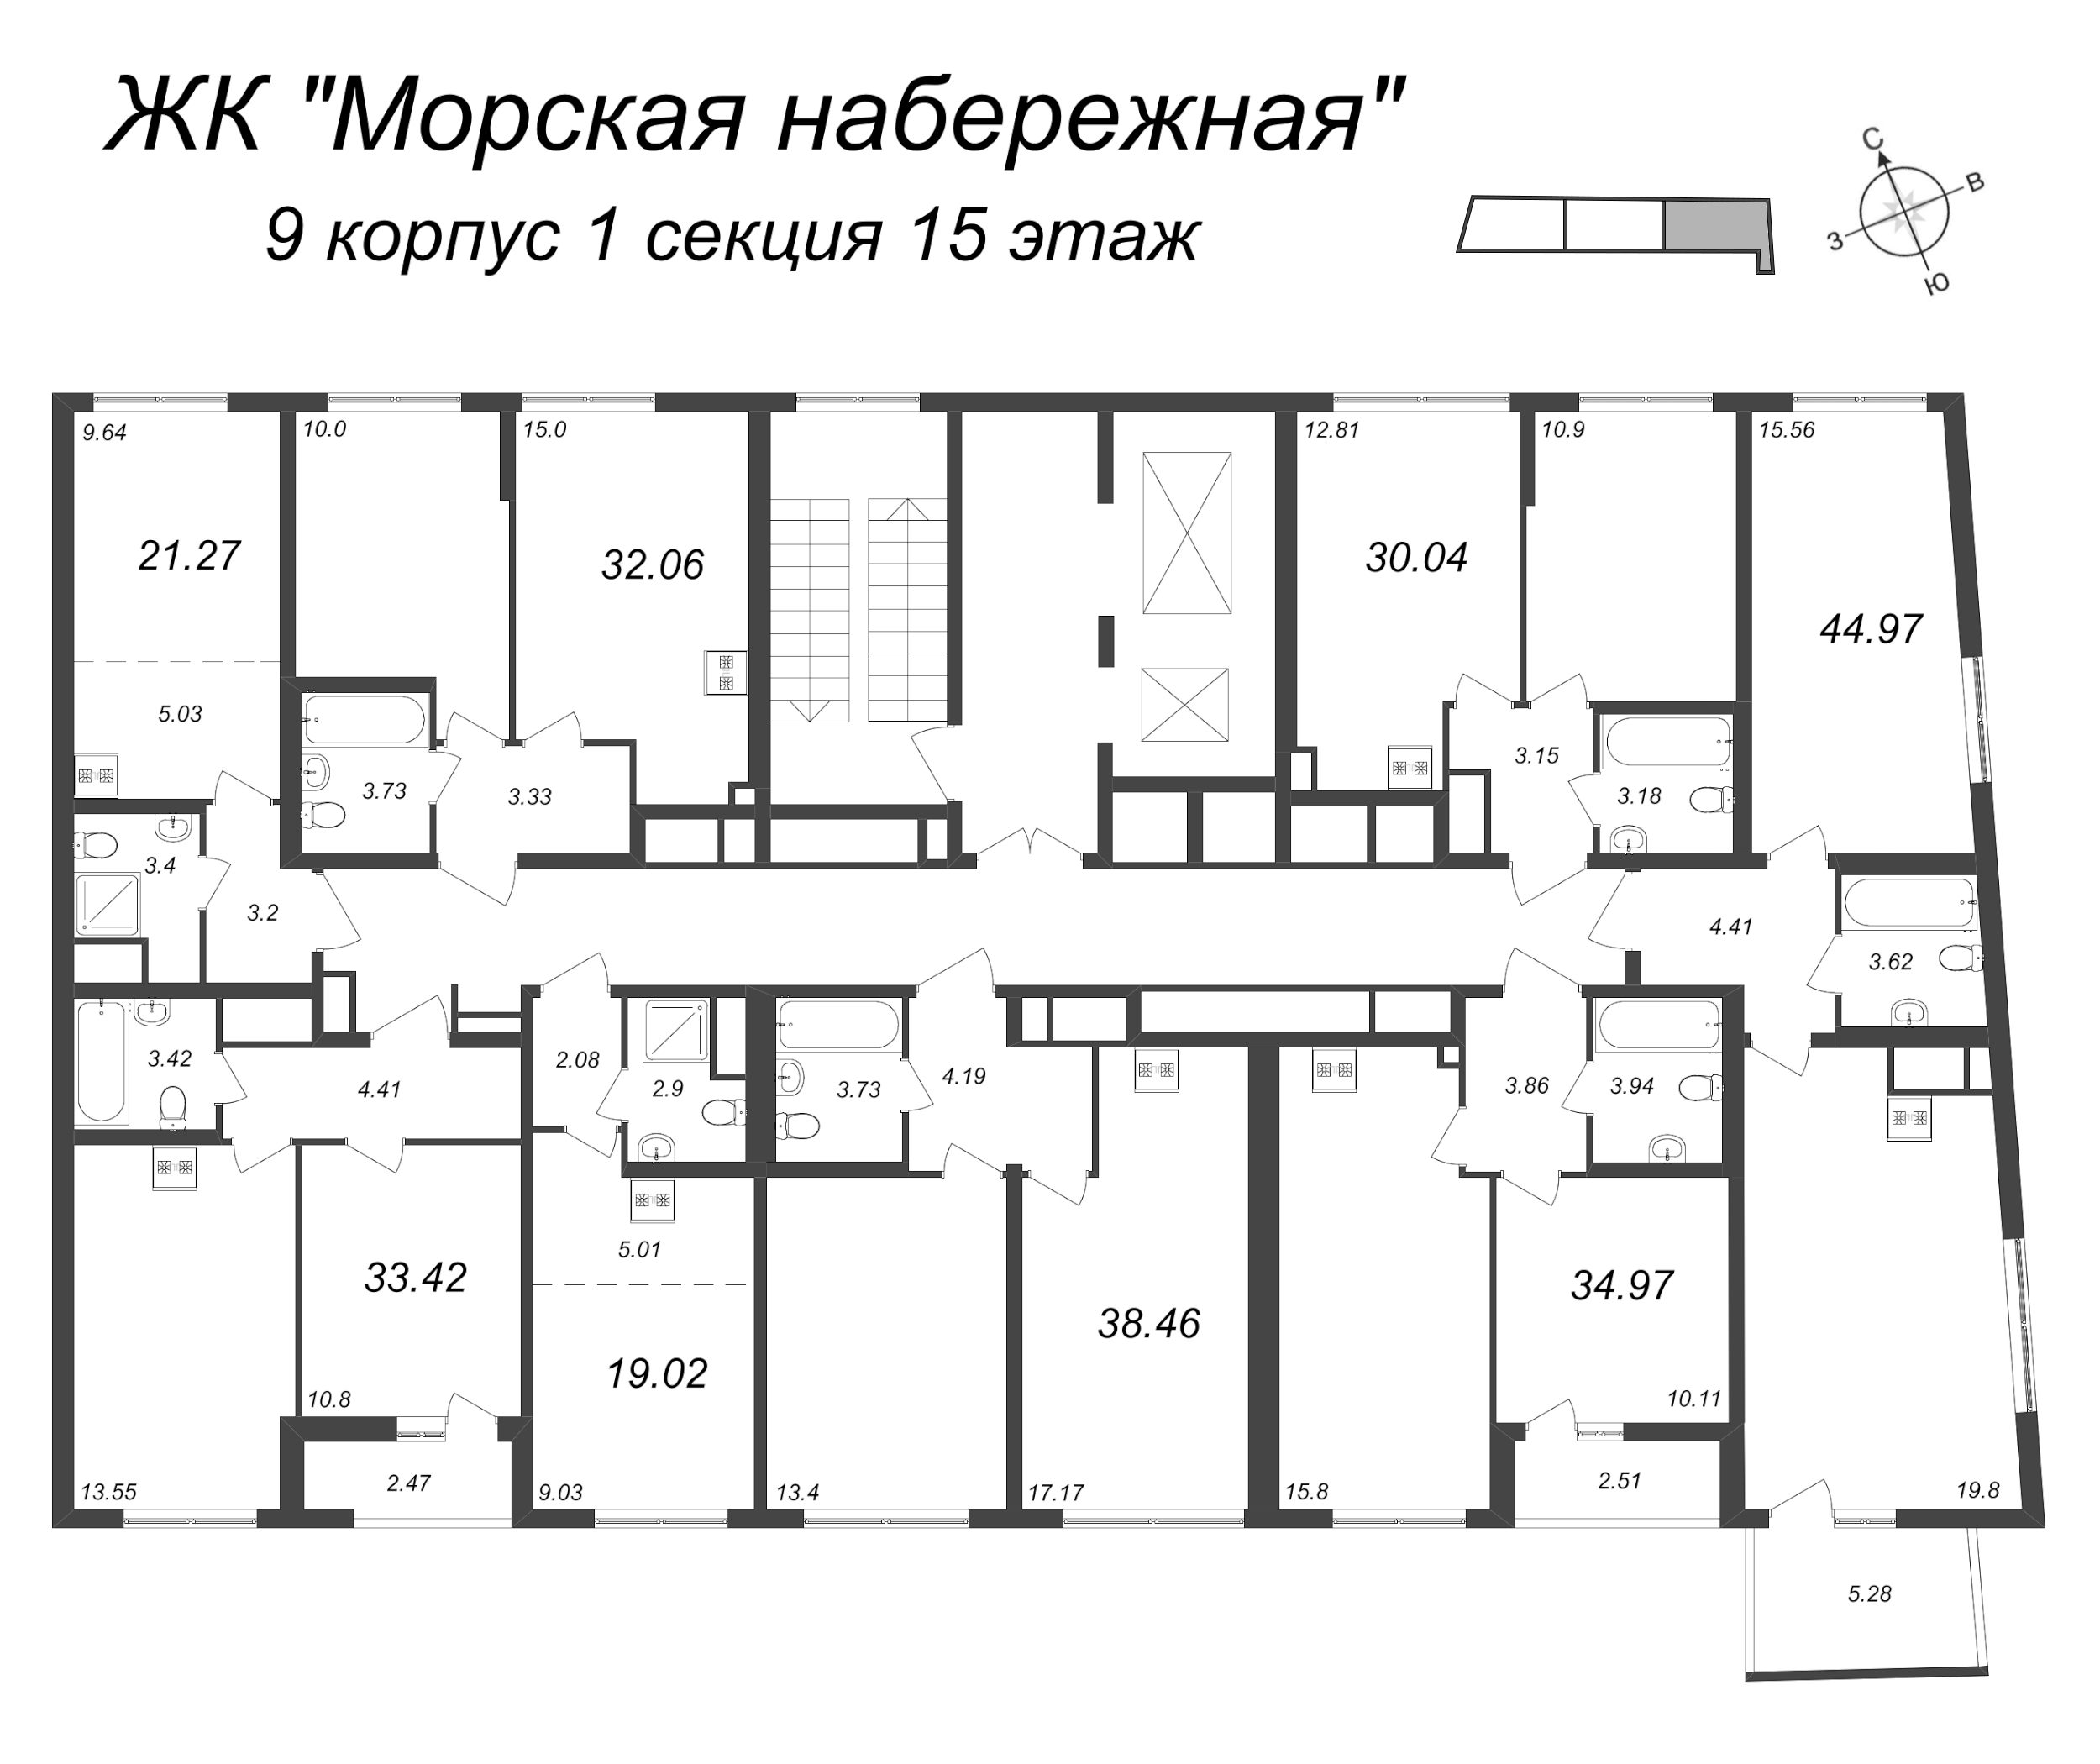 2-комнатная (Евро) квартира, 44.97 м² - планировка этажа